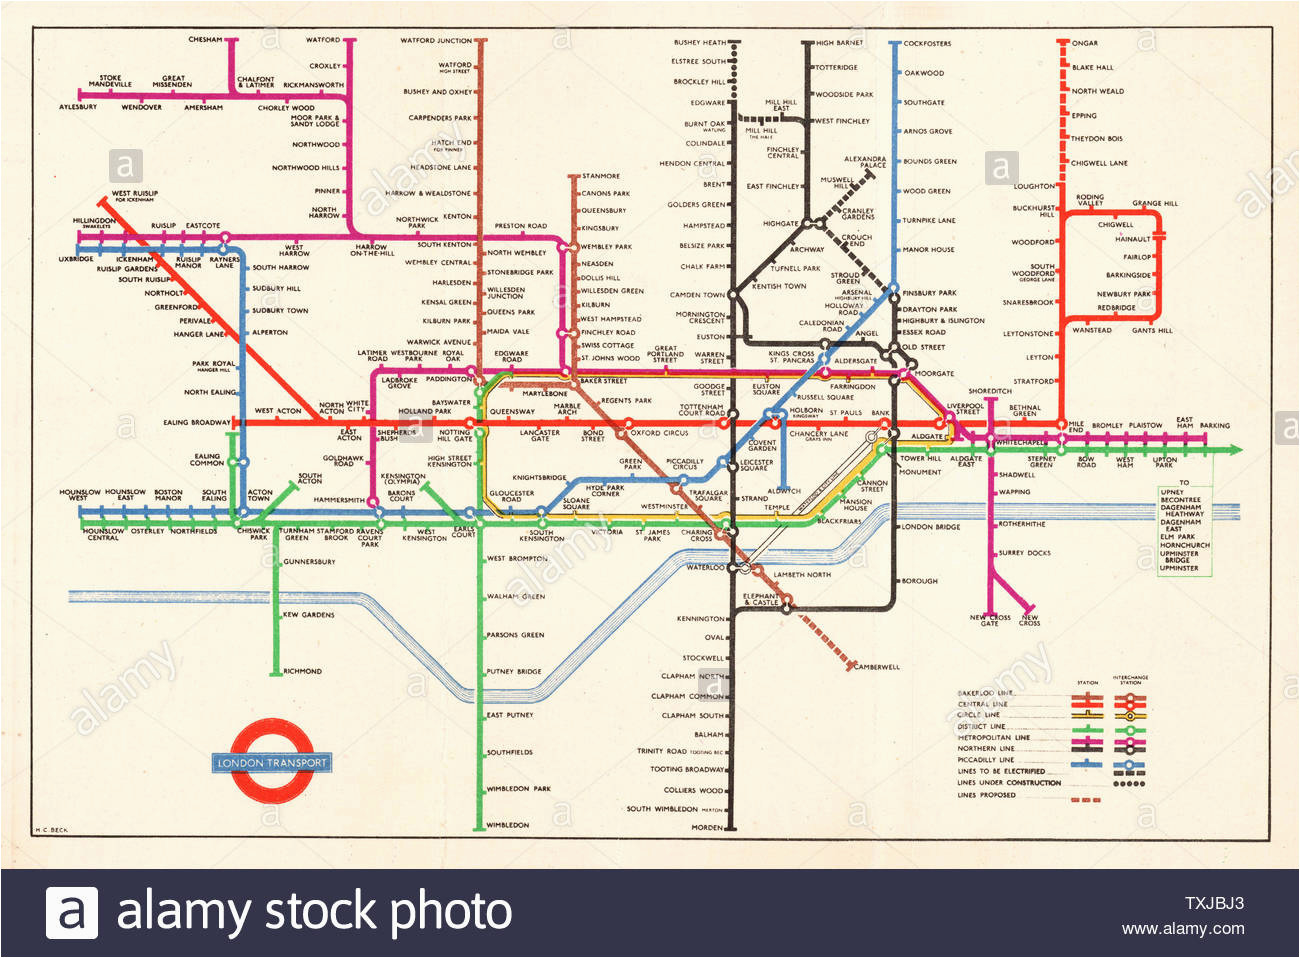 london underground map stock photos london underground map